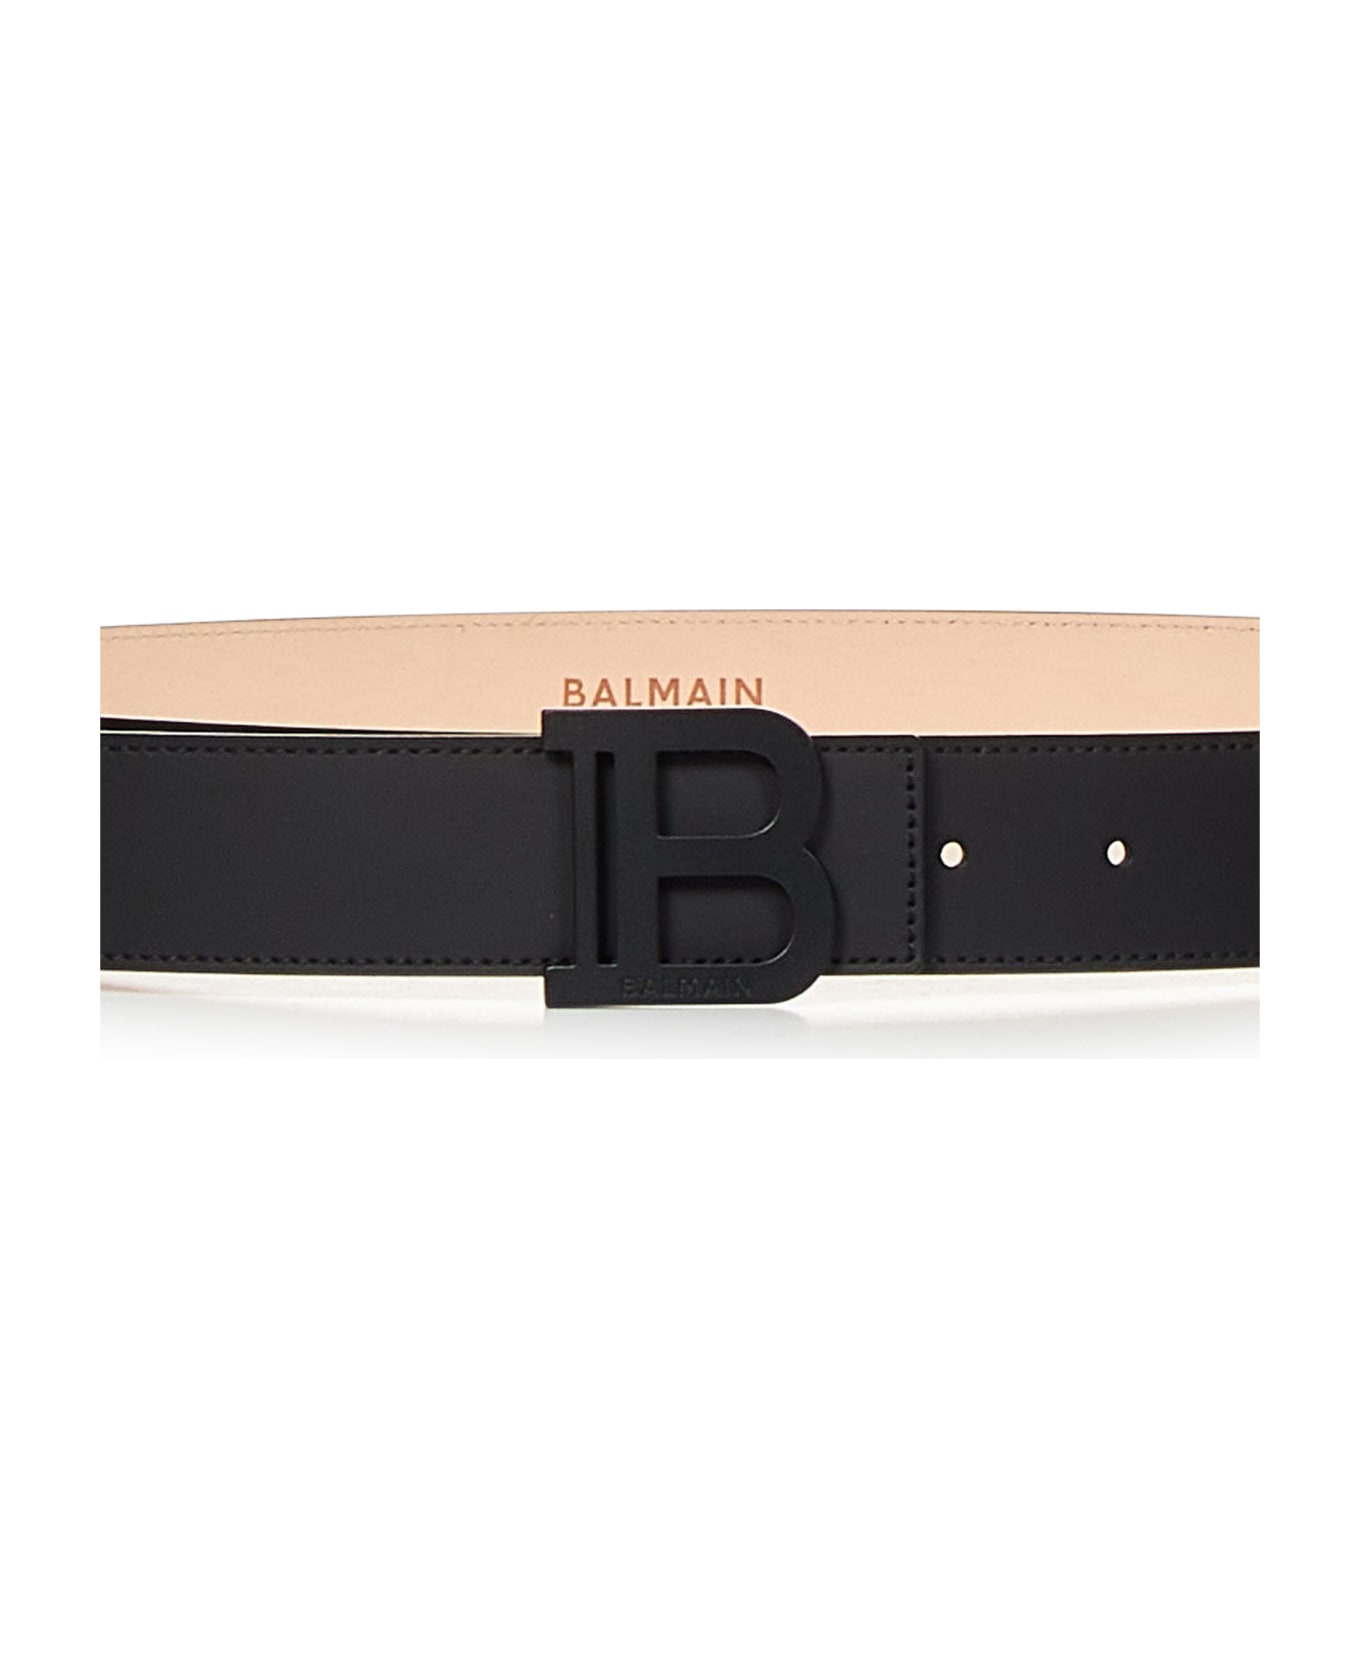 Balmain Belt - Black